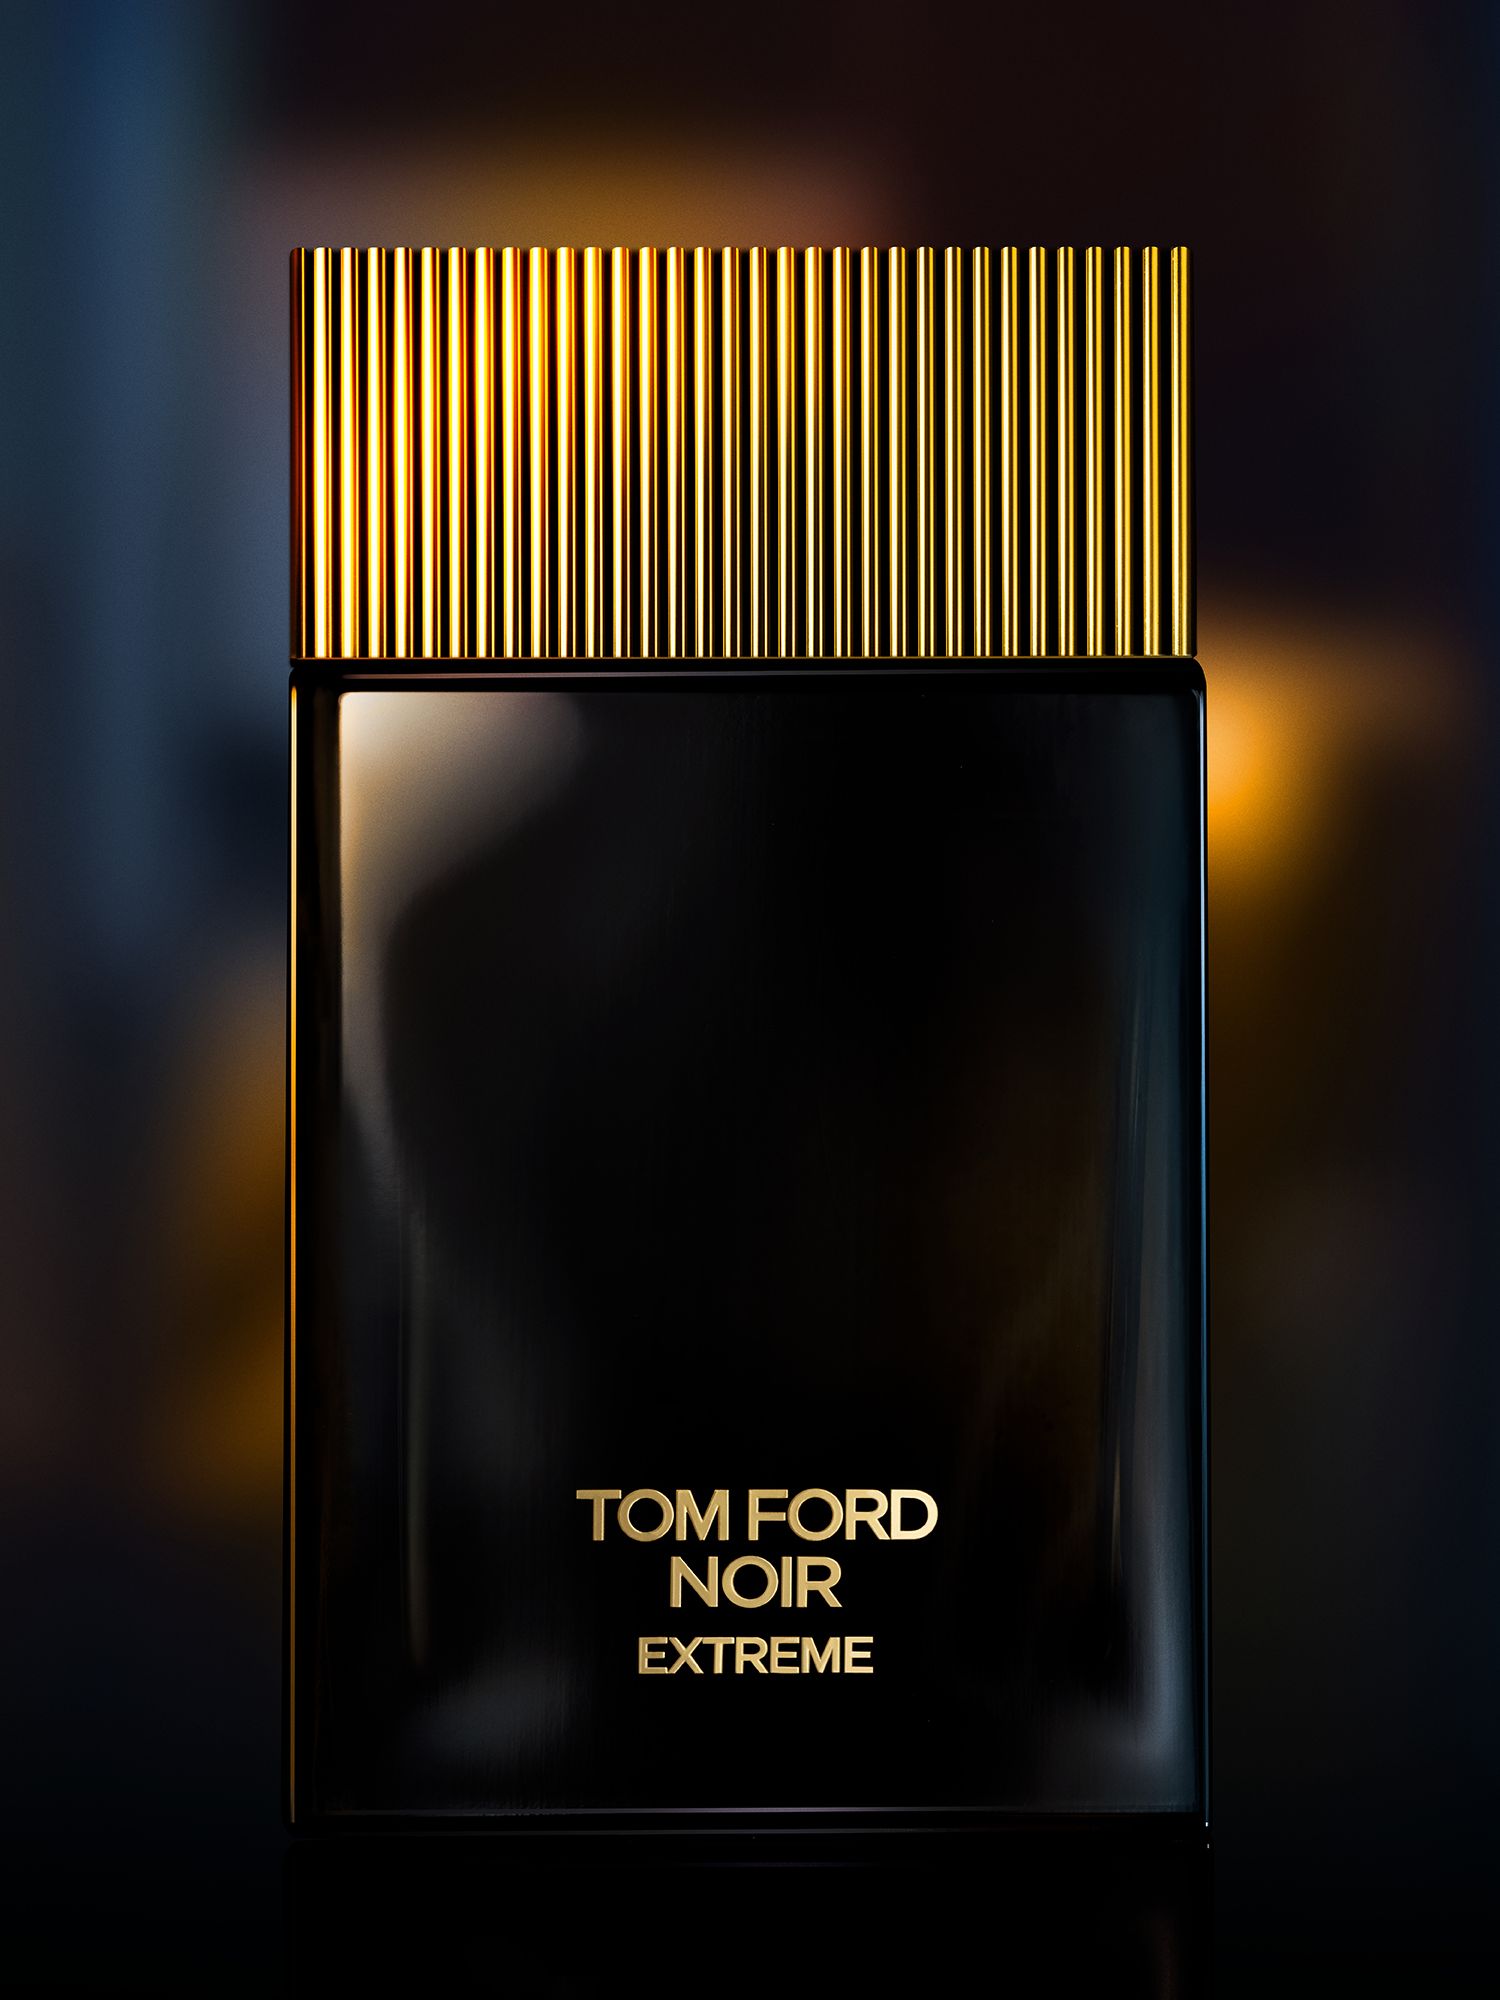 TOM FORD Noir Extreme, 50ml